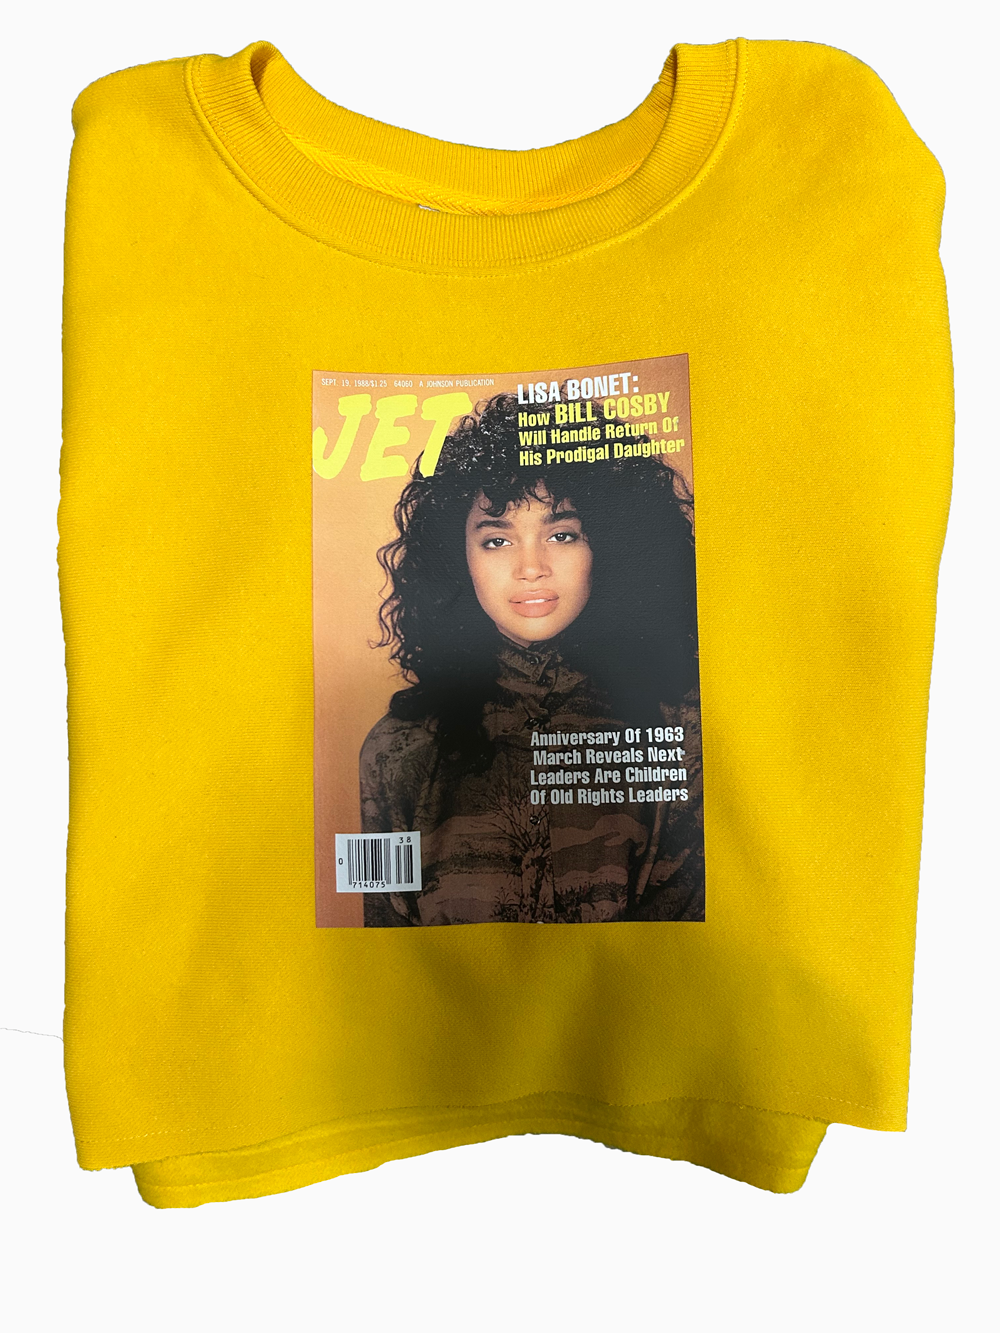 Lisa Bonet Jet Magazine - Cropped Golden Yellow Champion Sweatshirt